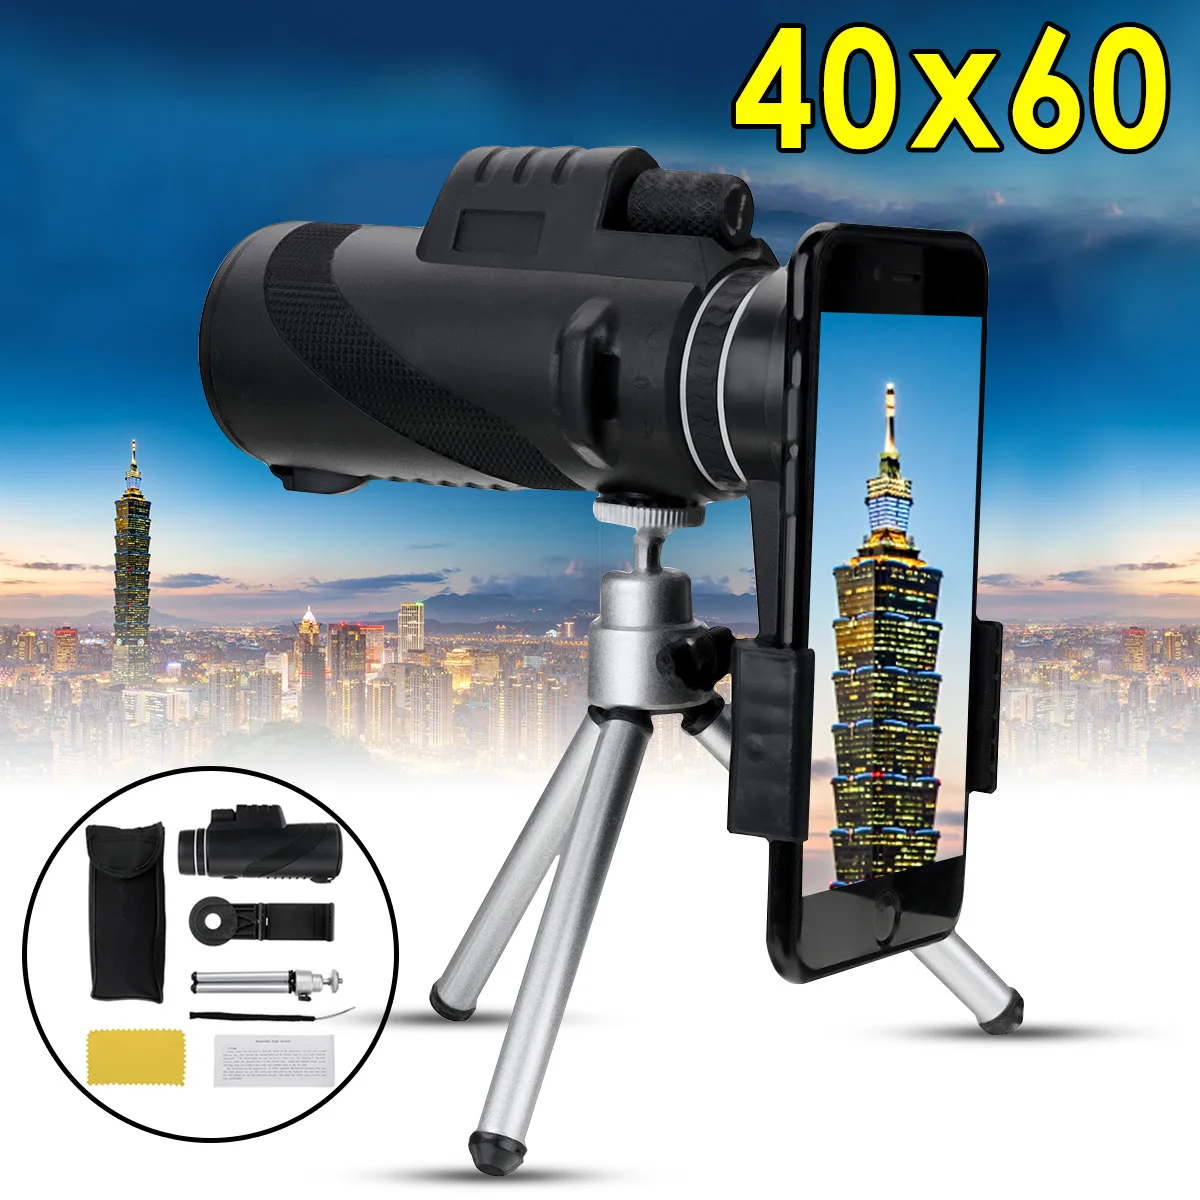 40X60 Zoom HD Lens Mini Night Vision Monocular Telescope